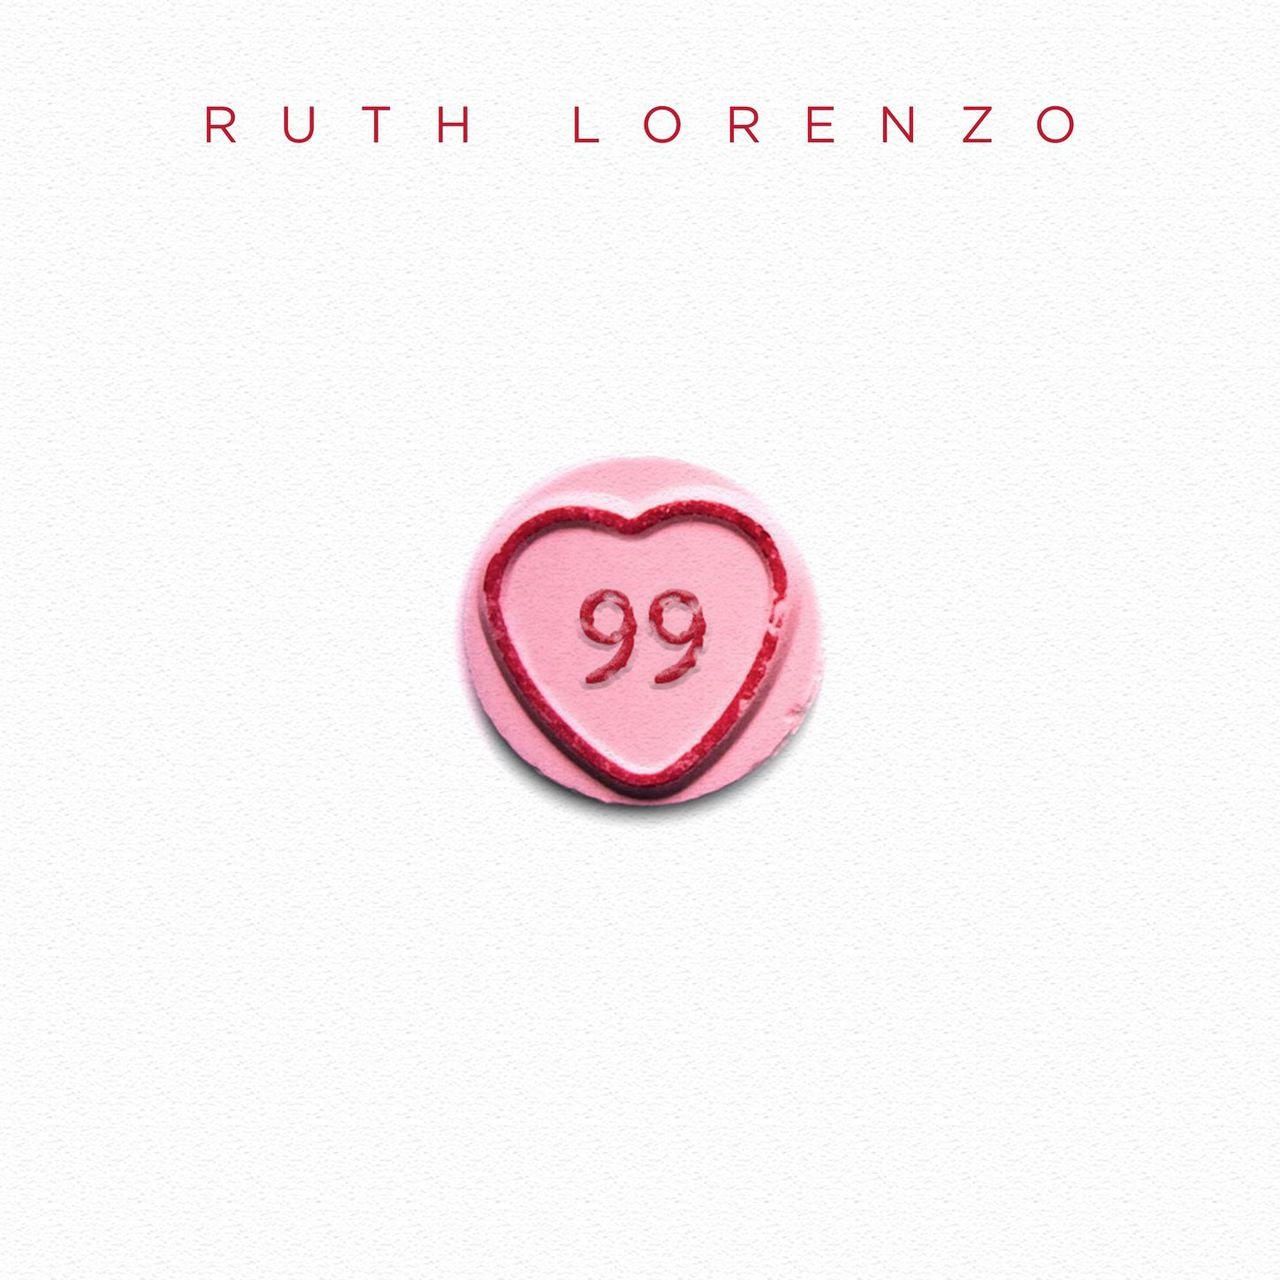 Ruth Lorenzo 99 cover artwork